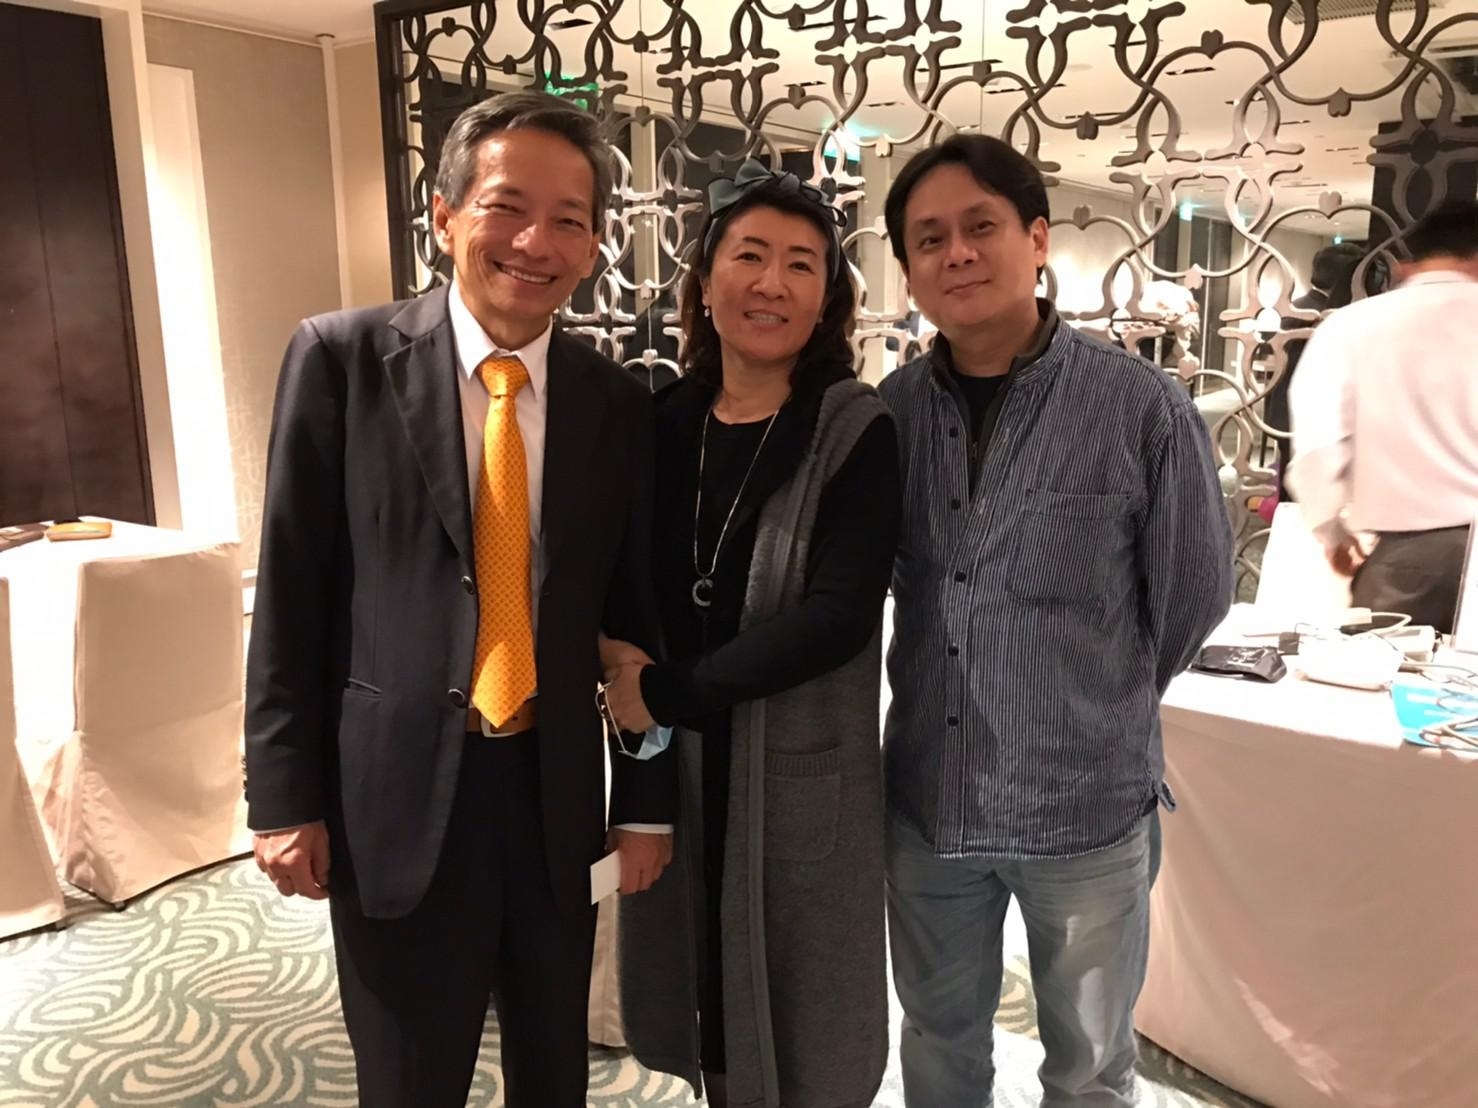 President of the CUHK Business School Taiwan Alumni Association John Wei (left) enjoyed the dinner with alumni